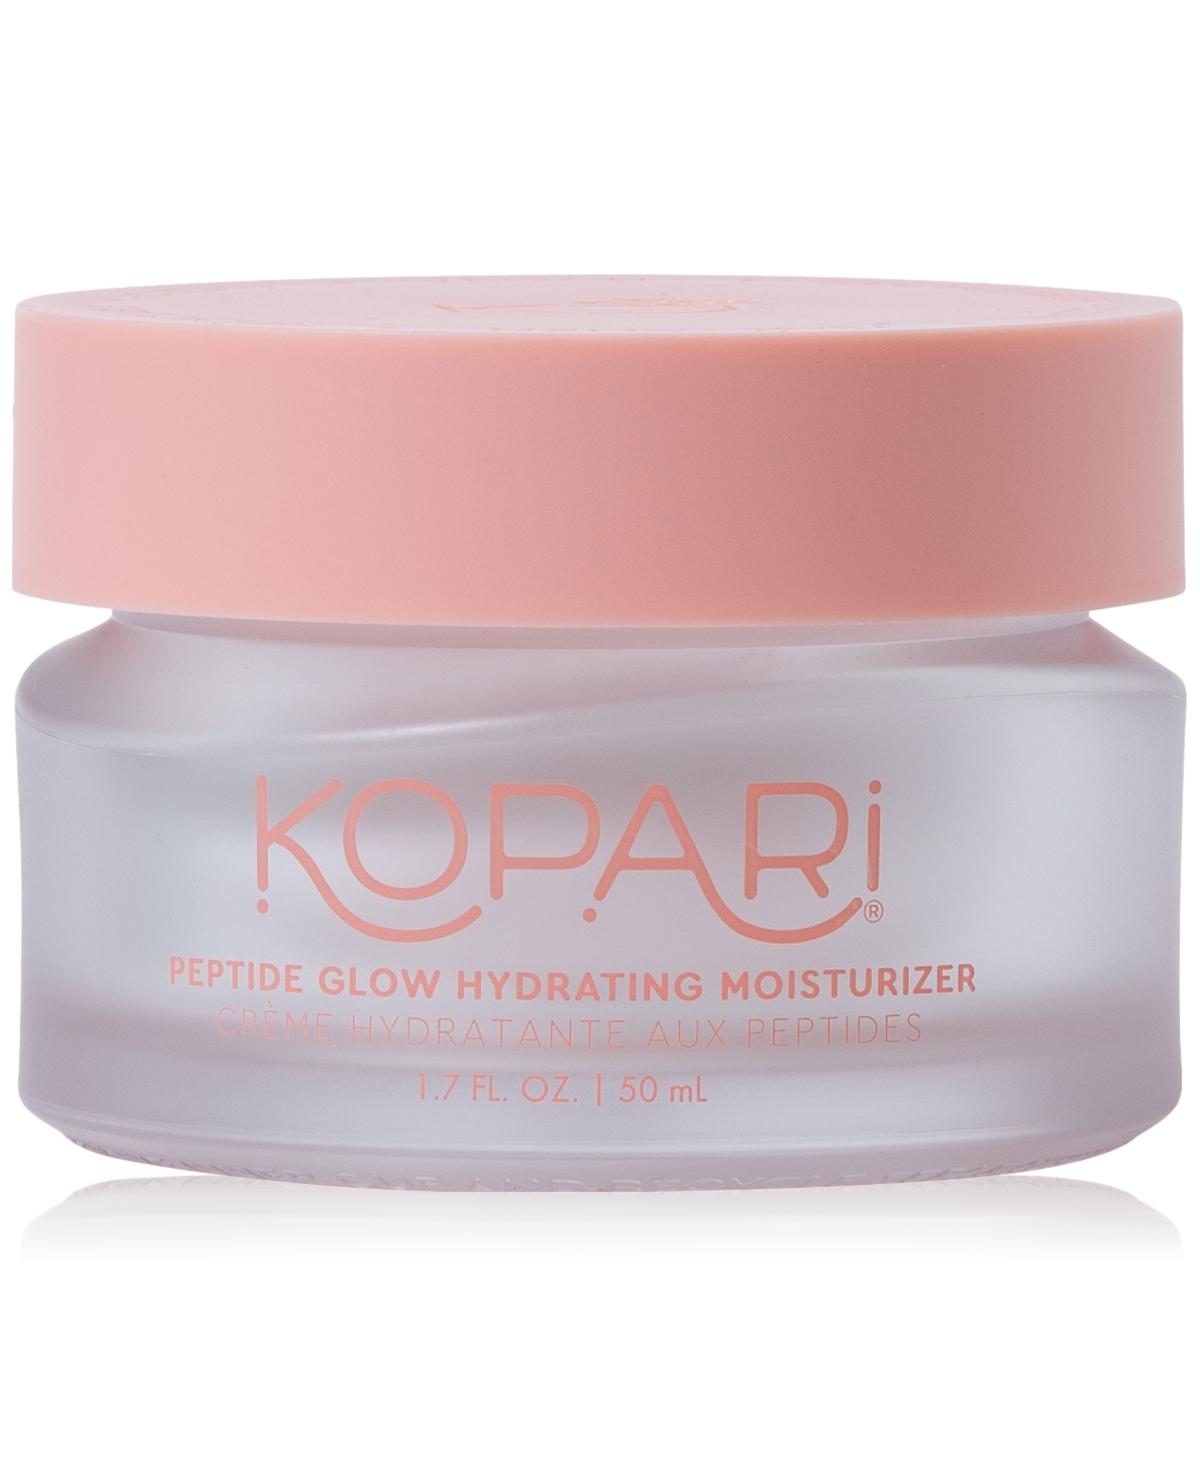 Kopari Beauty Peptide Glow Hydrating Moisturizer